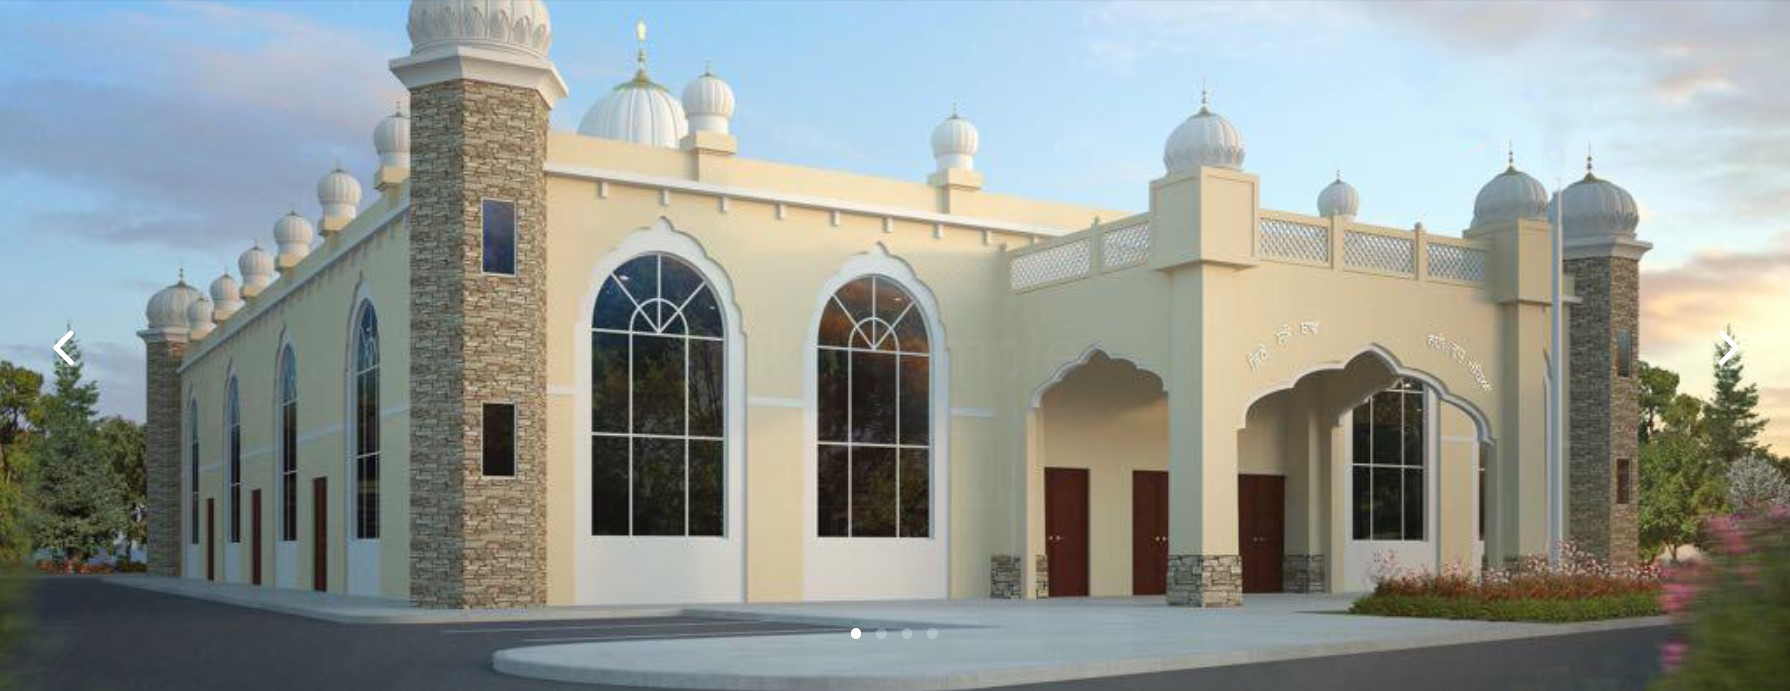 Guru Nanak Sikh Temple -Fairfield